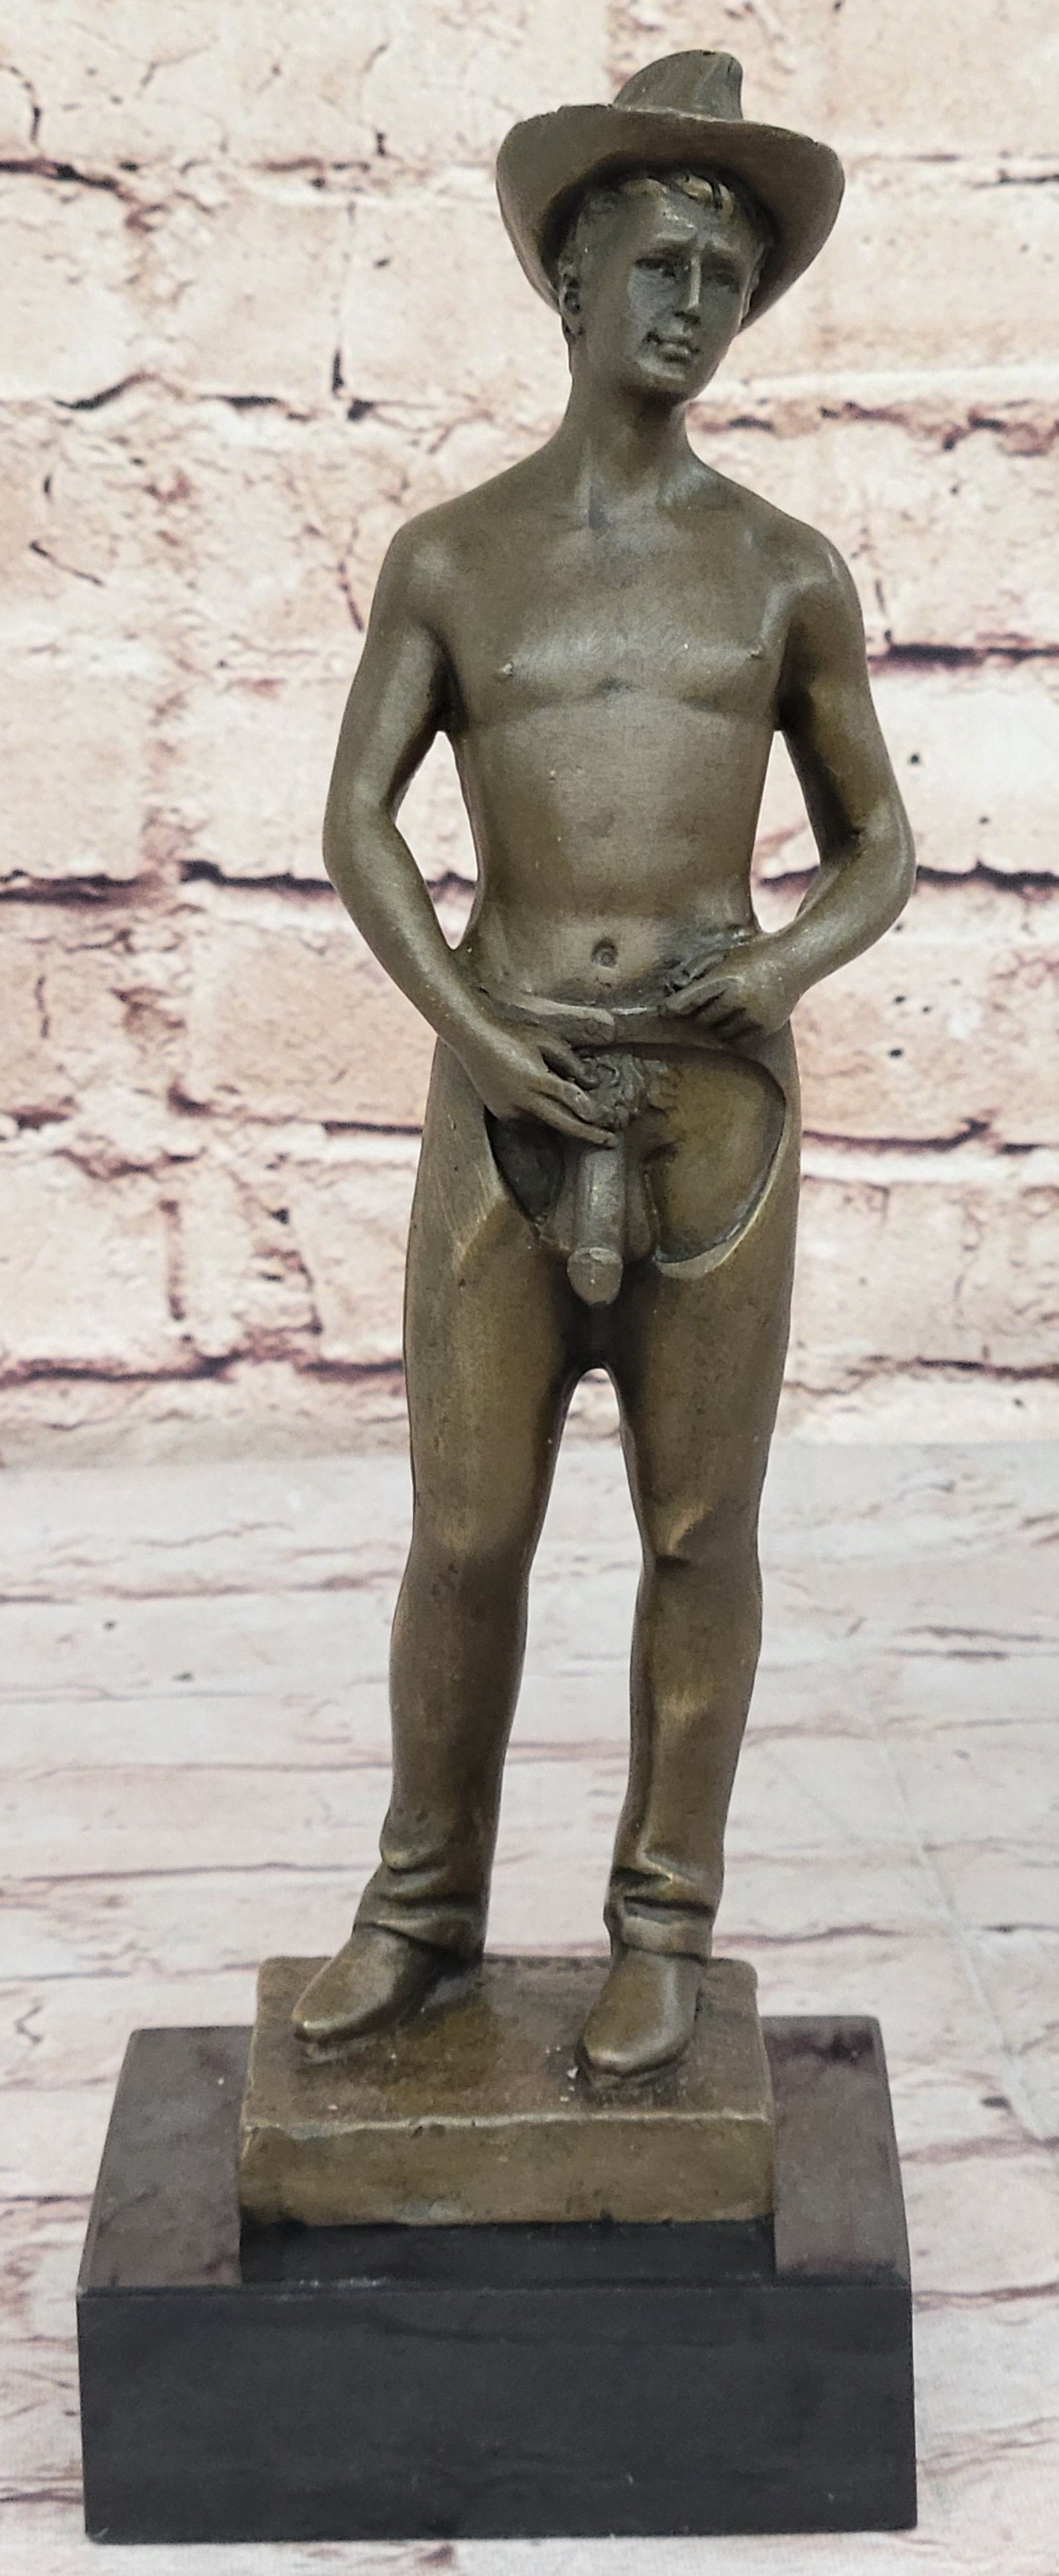 Nick Mario Handcrafted Bronze Sculpture Original Signed Artist Nude Figurine